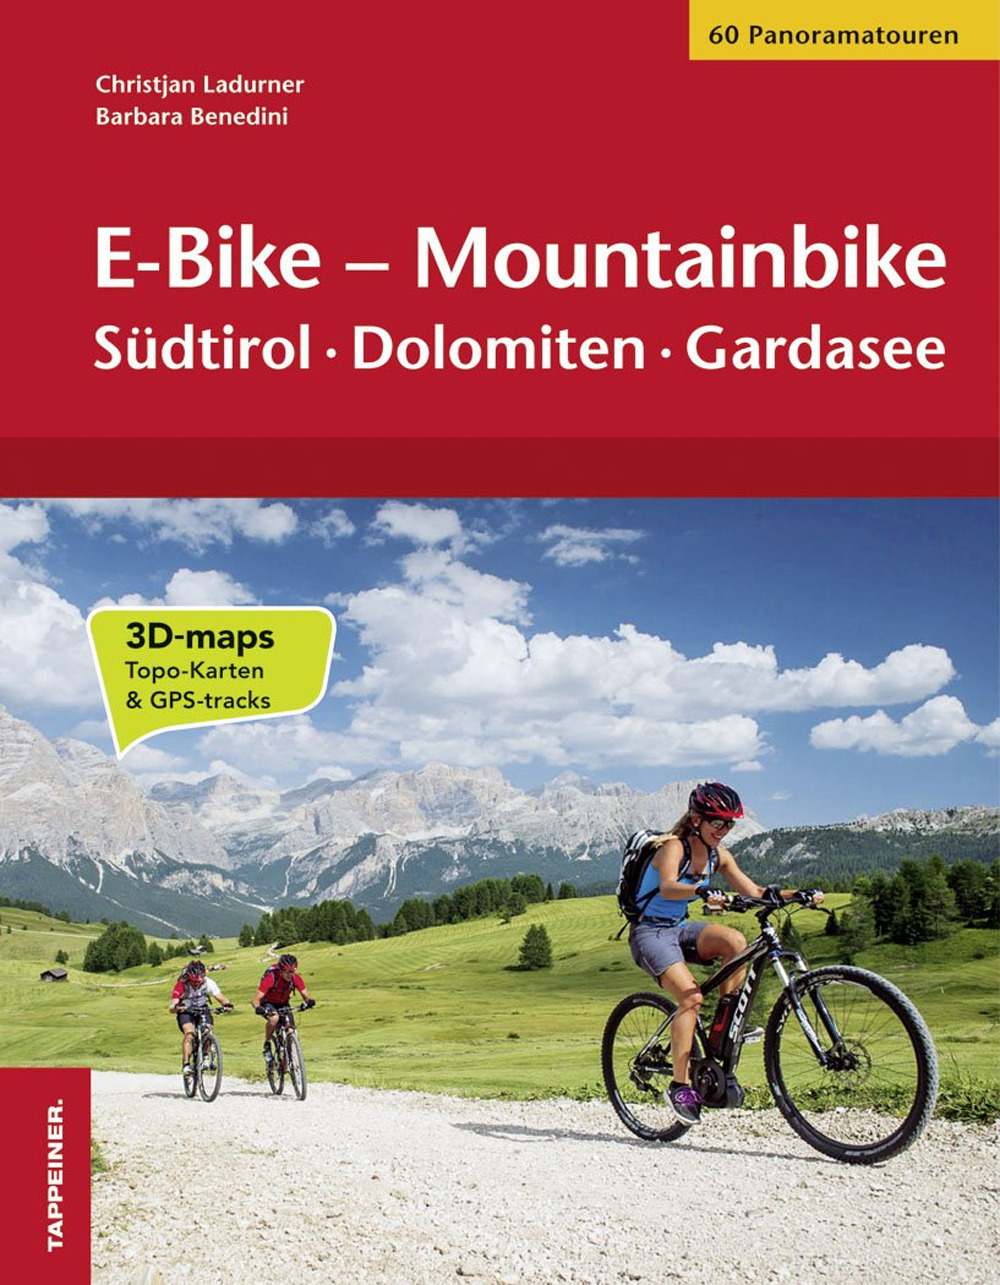 E-bike-mountainbike. Südtirol, Dolomiten, Gardasee